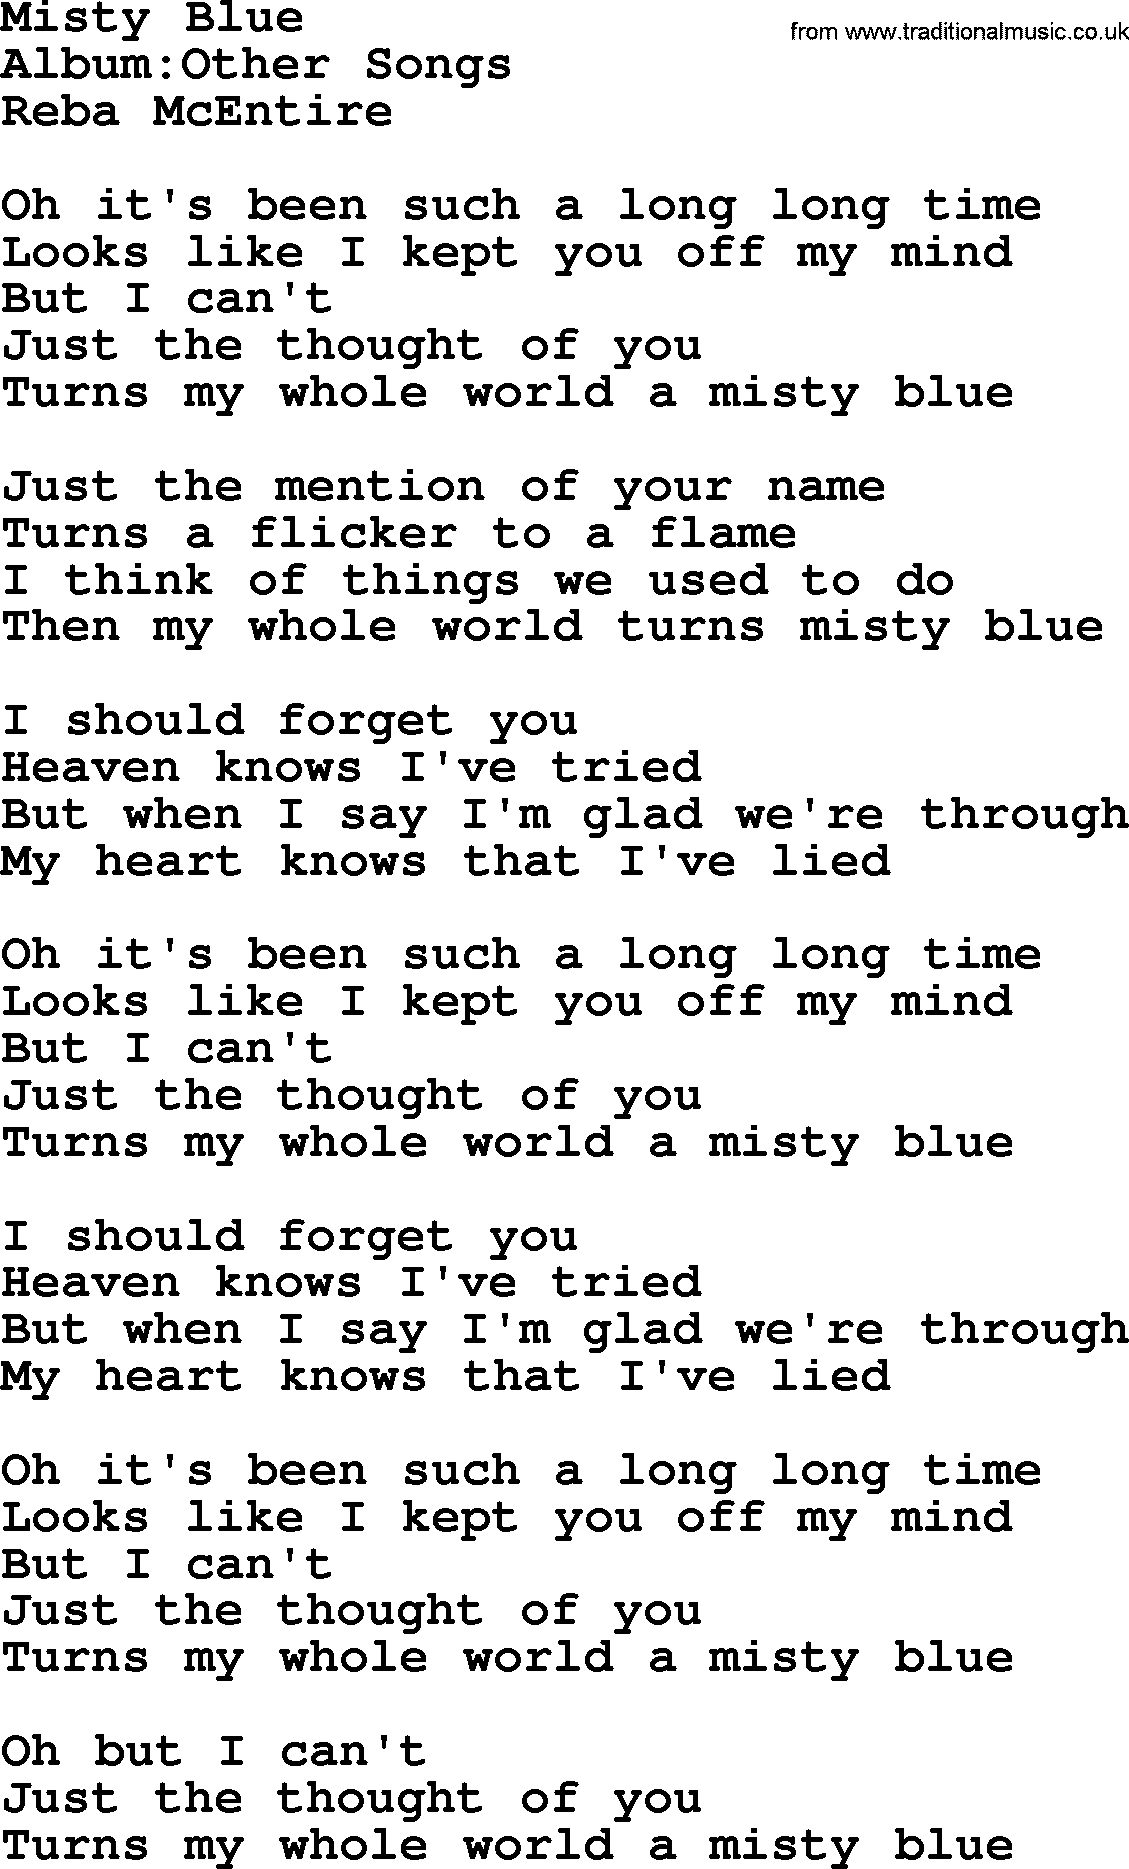 Reba McEntire song: Misty Blue lyrics